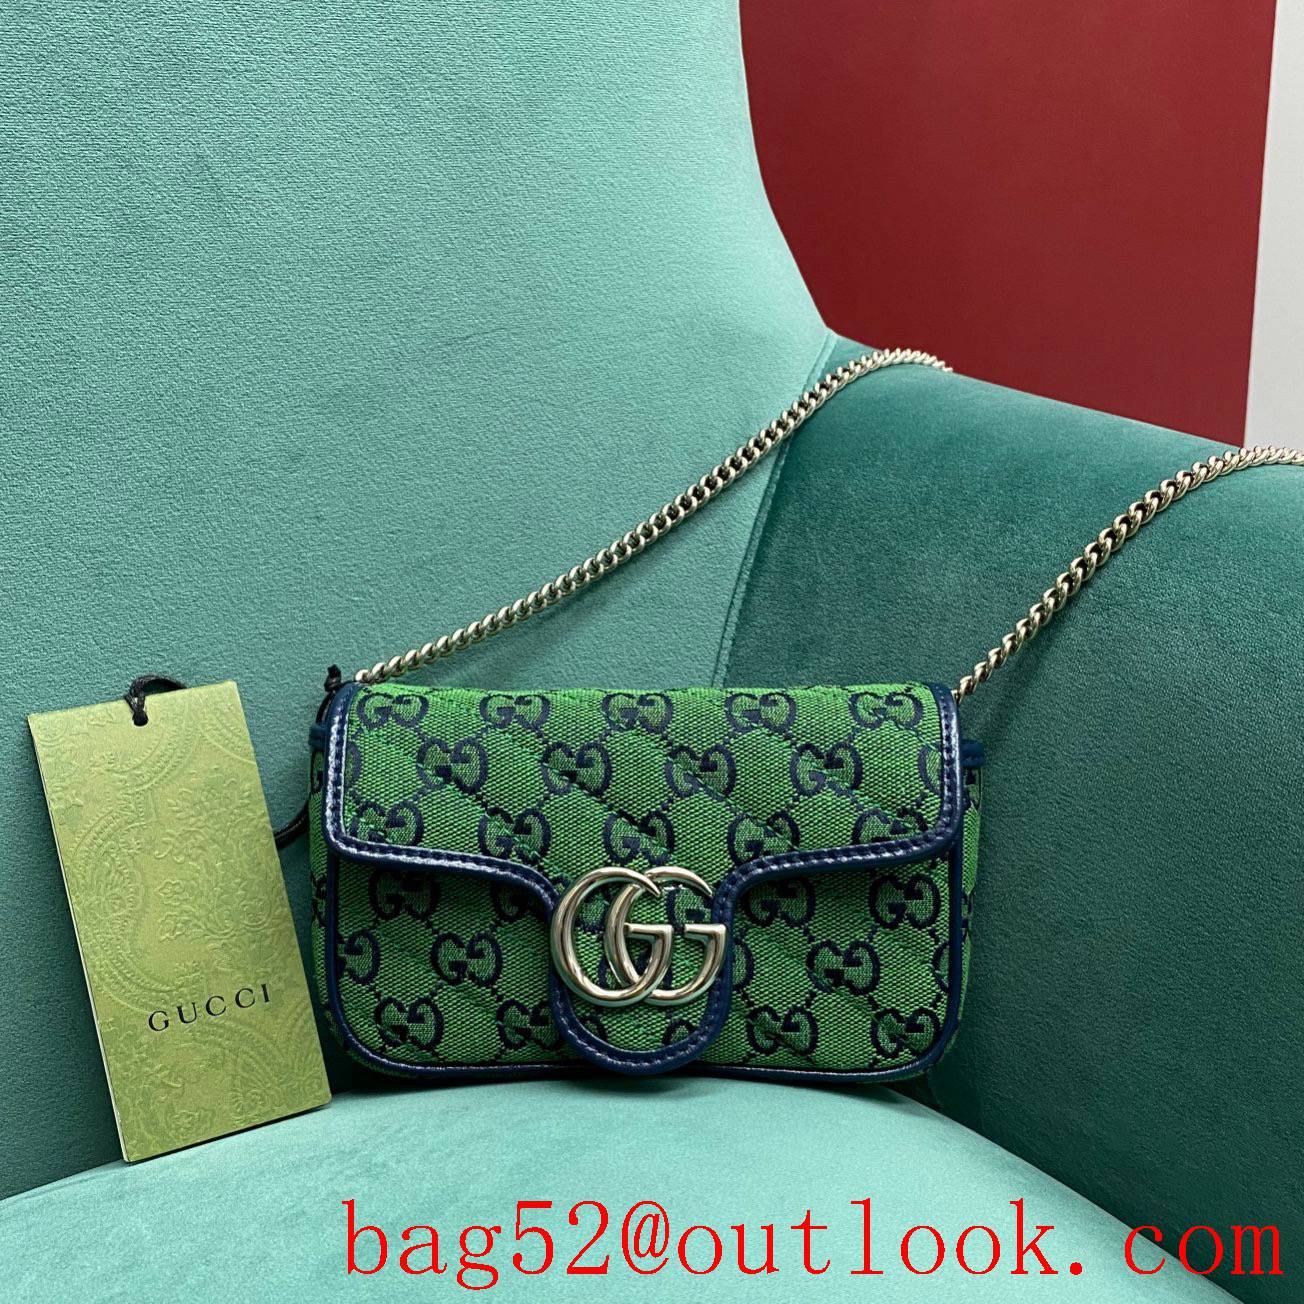 Gucci GG Nanomarmont Original Leather green Sliver buckle chain shoulder handbag